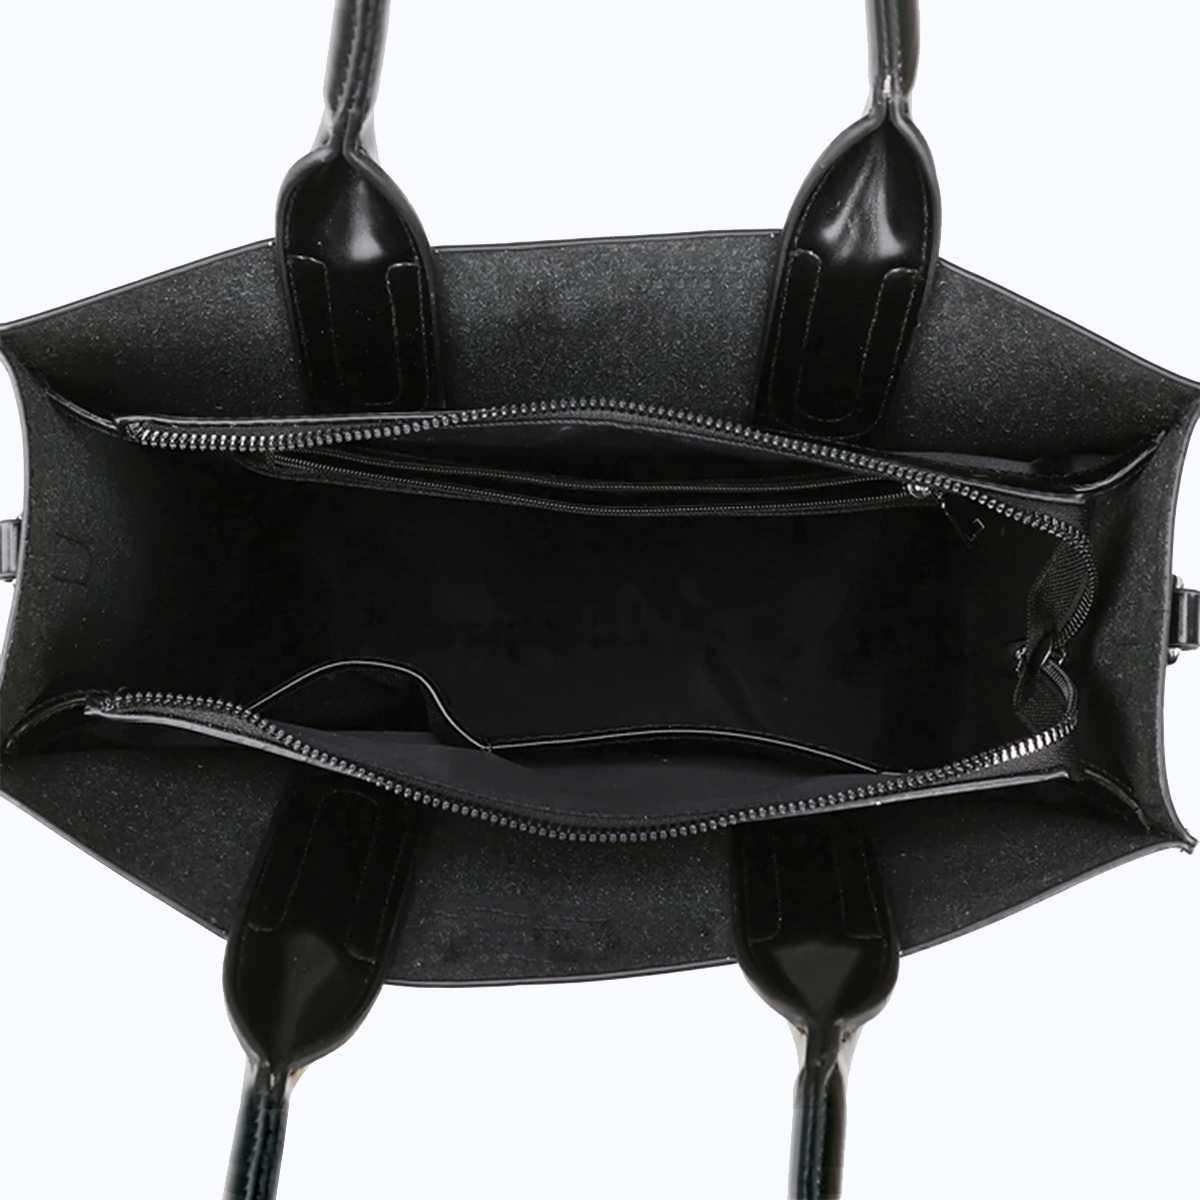 Miniature Pinscher Luxury Handbag V3